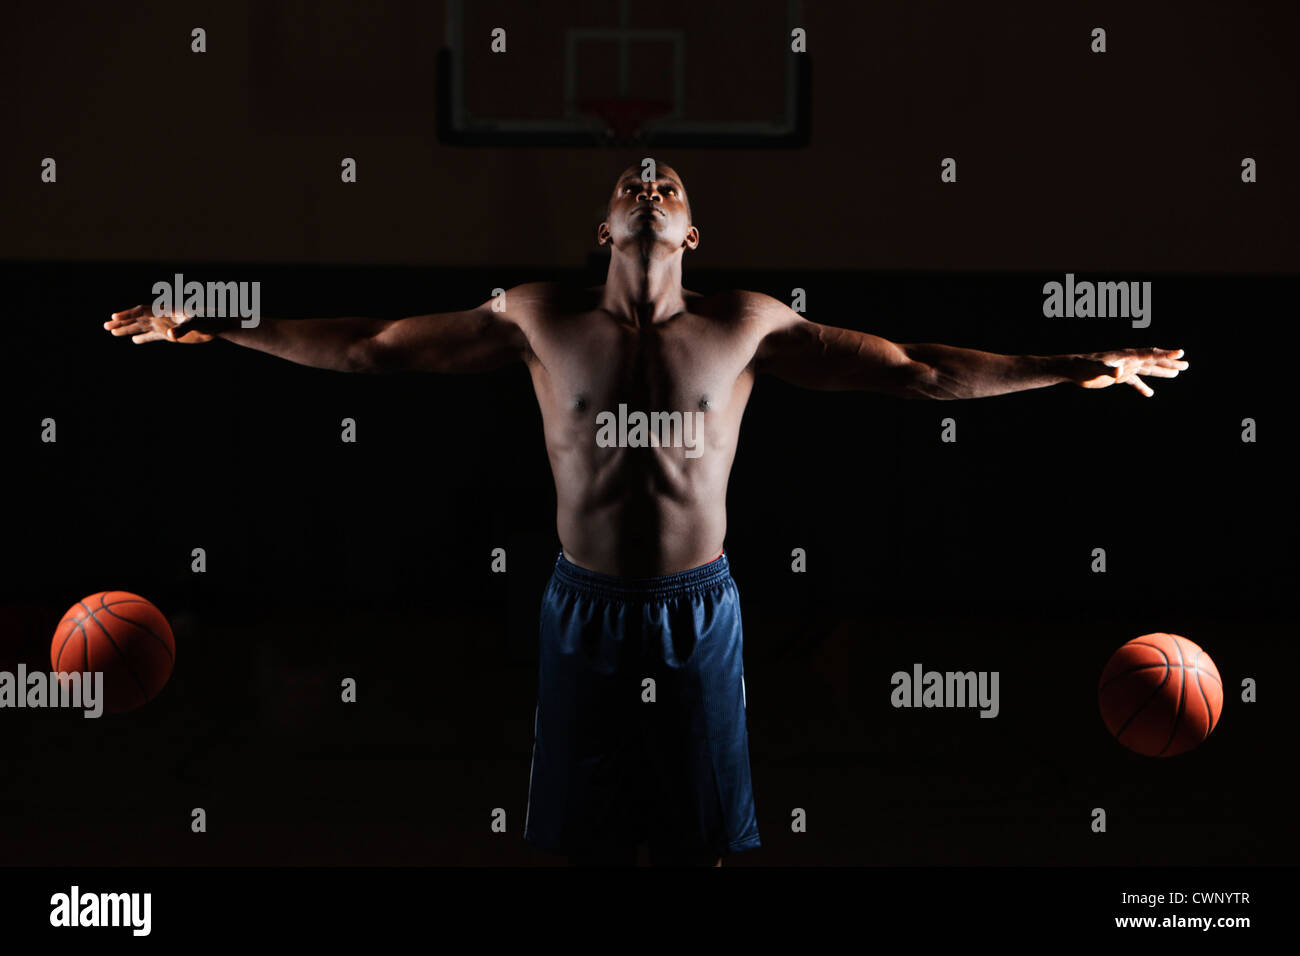 Barechested basketball player dribbling two basketballs Stock Photo